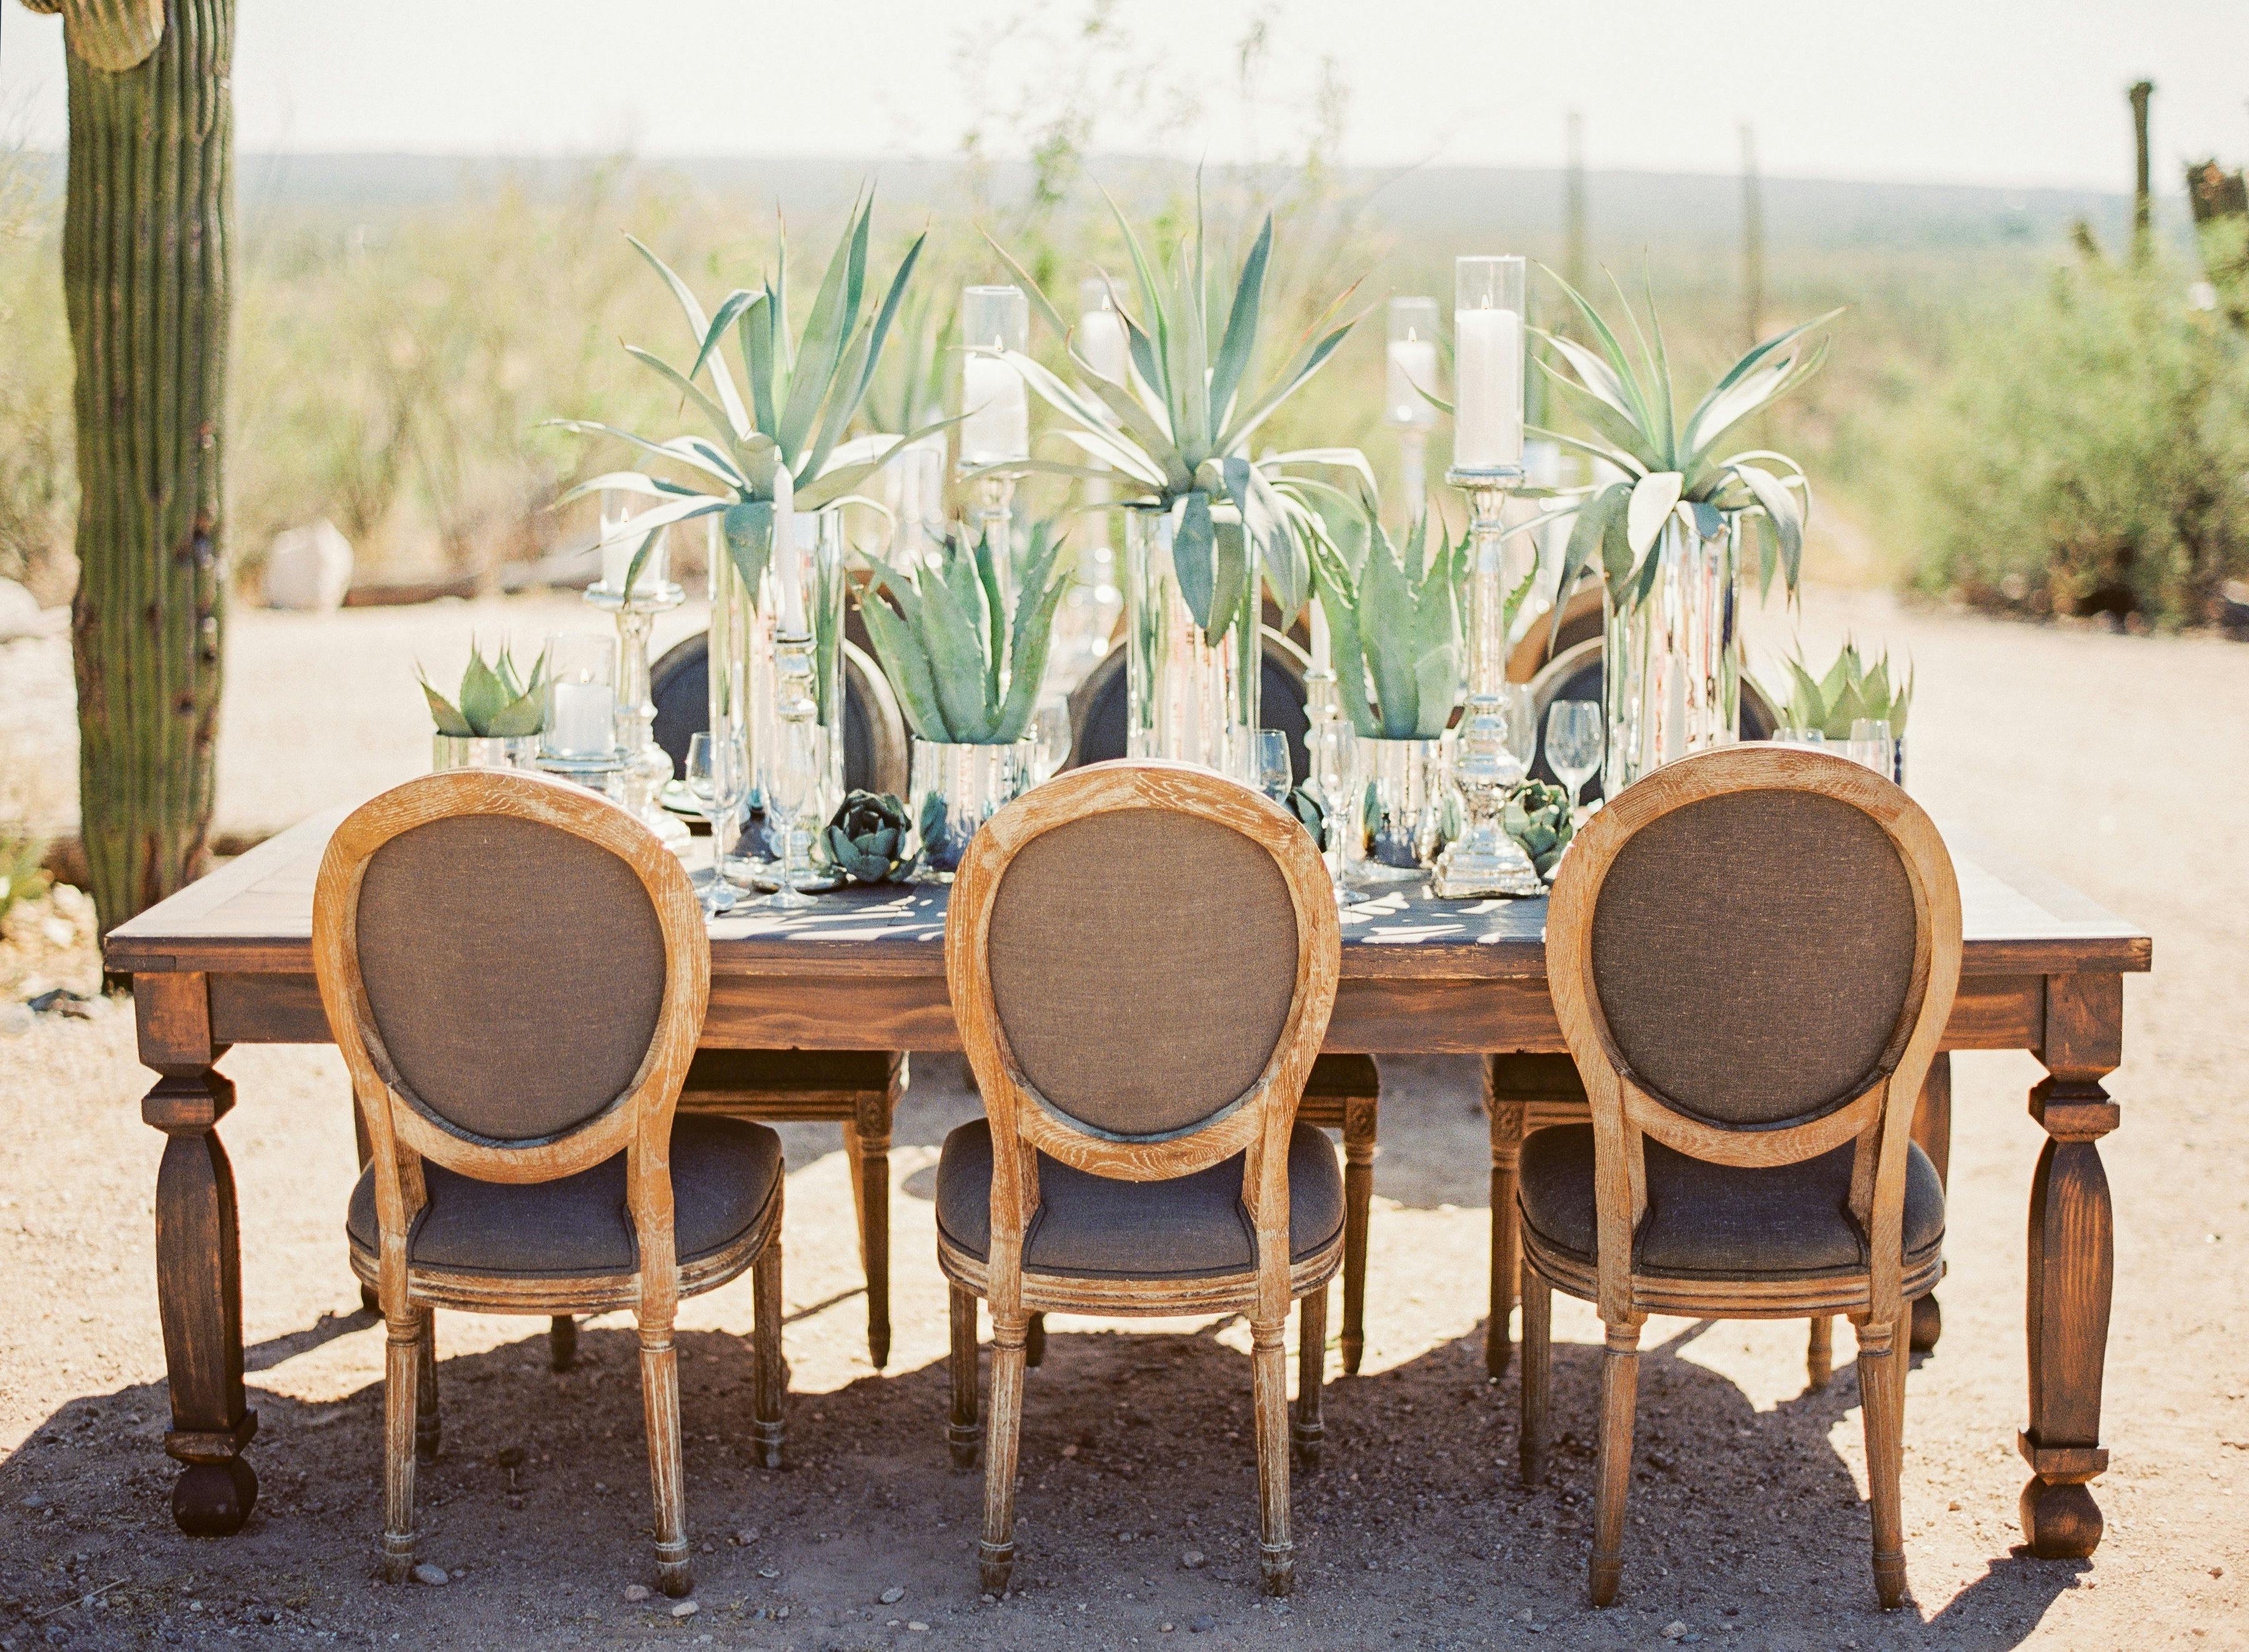 Tanque Verde Ranch Elopement in Tucson, AZ With Succulent Wedding Centerpieces